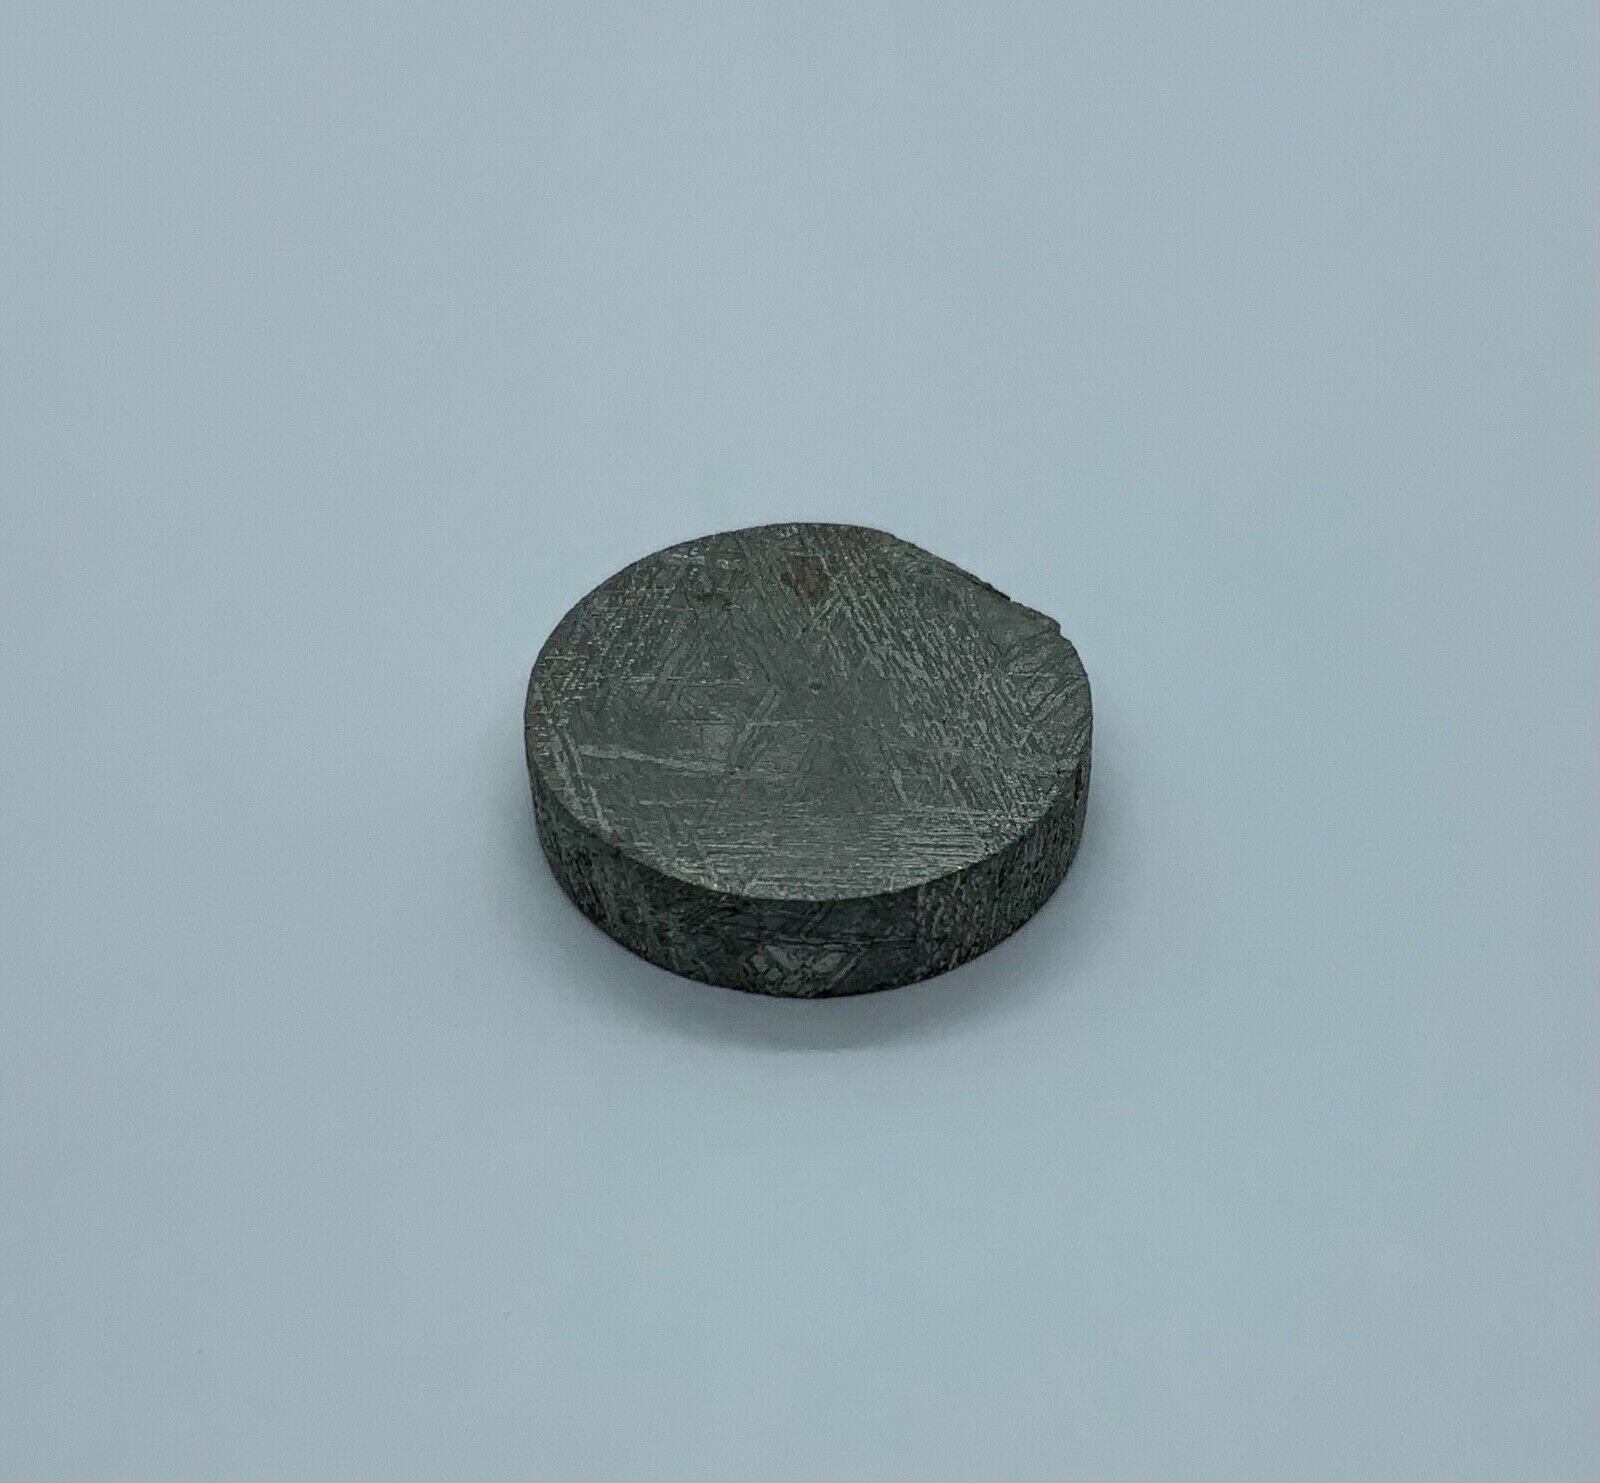 Meteorite Circular Piece 13/16